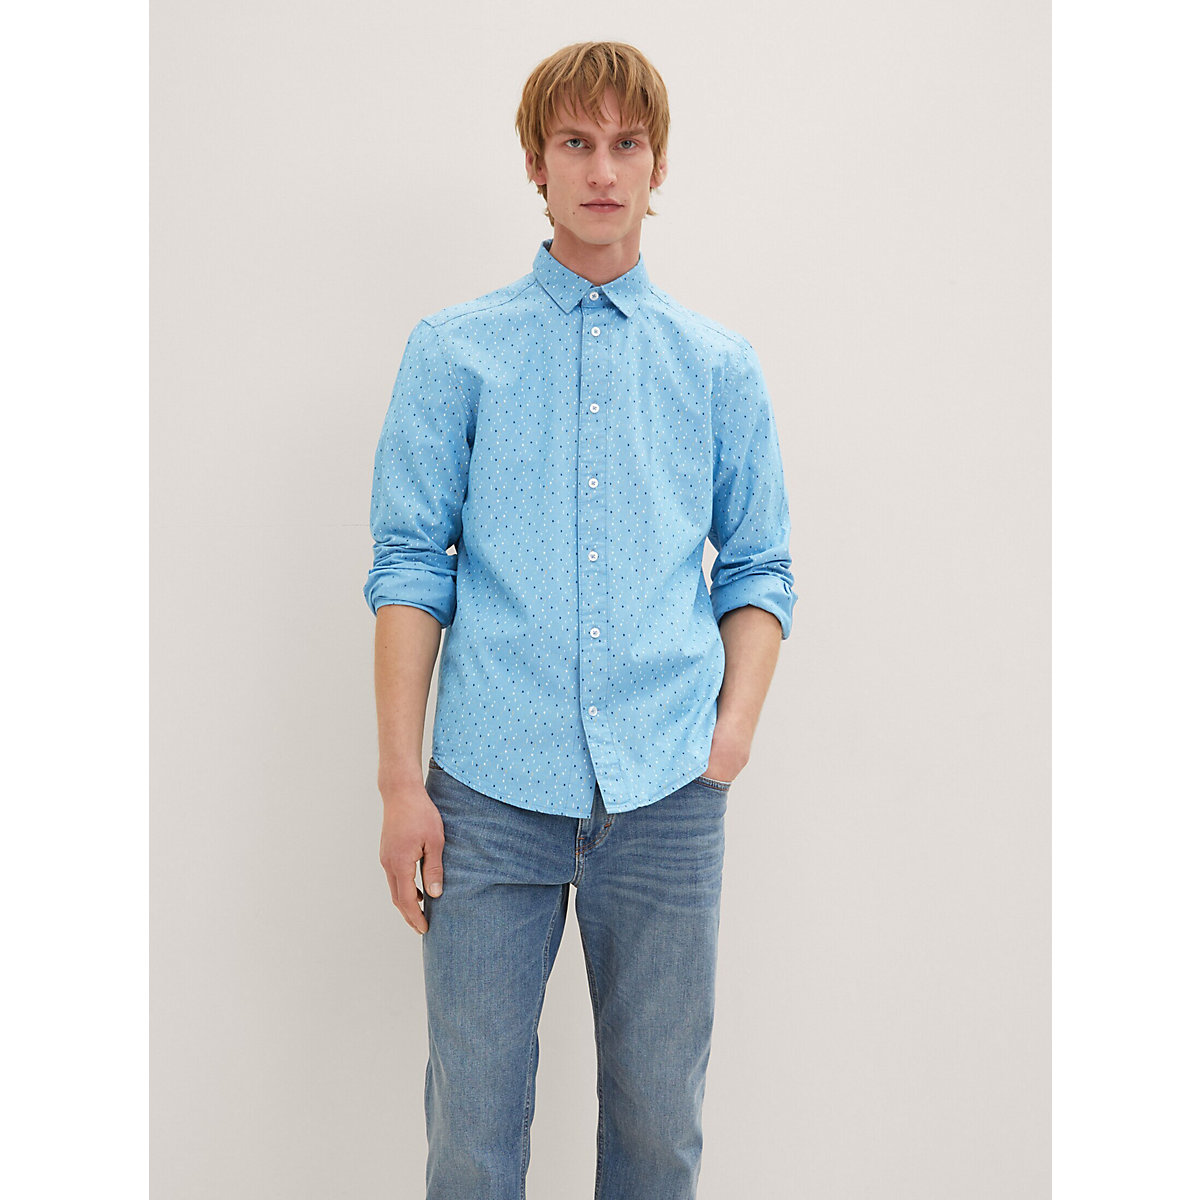 TOM TAILOR Blusen & Shirts Hemd mit Allover-Print  Langarmhemden blau